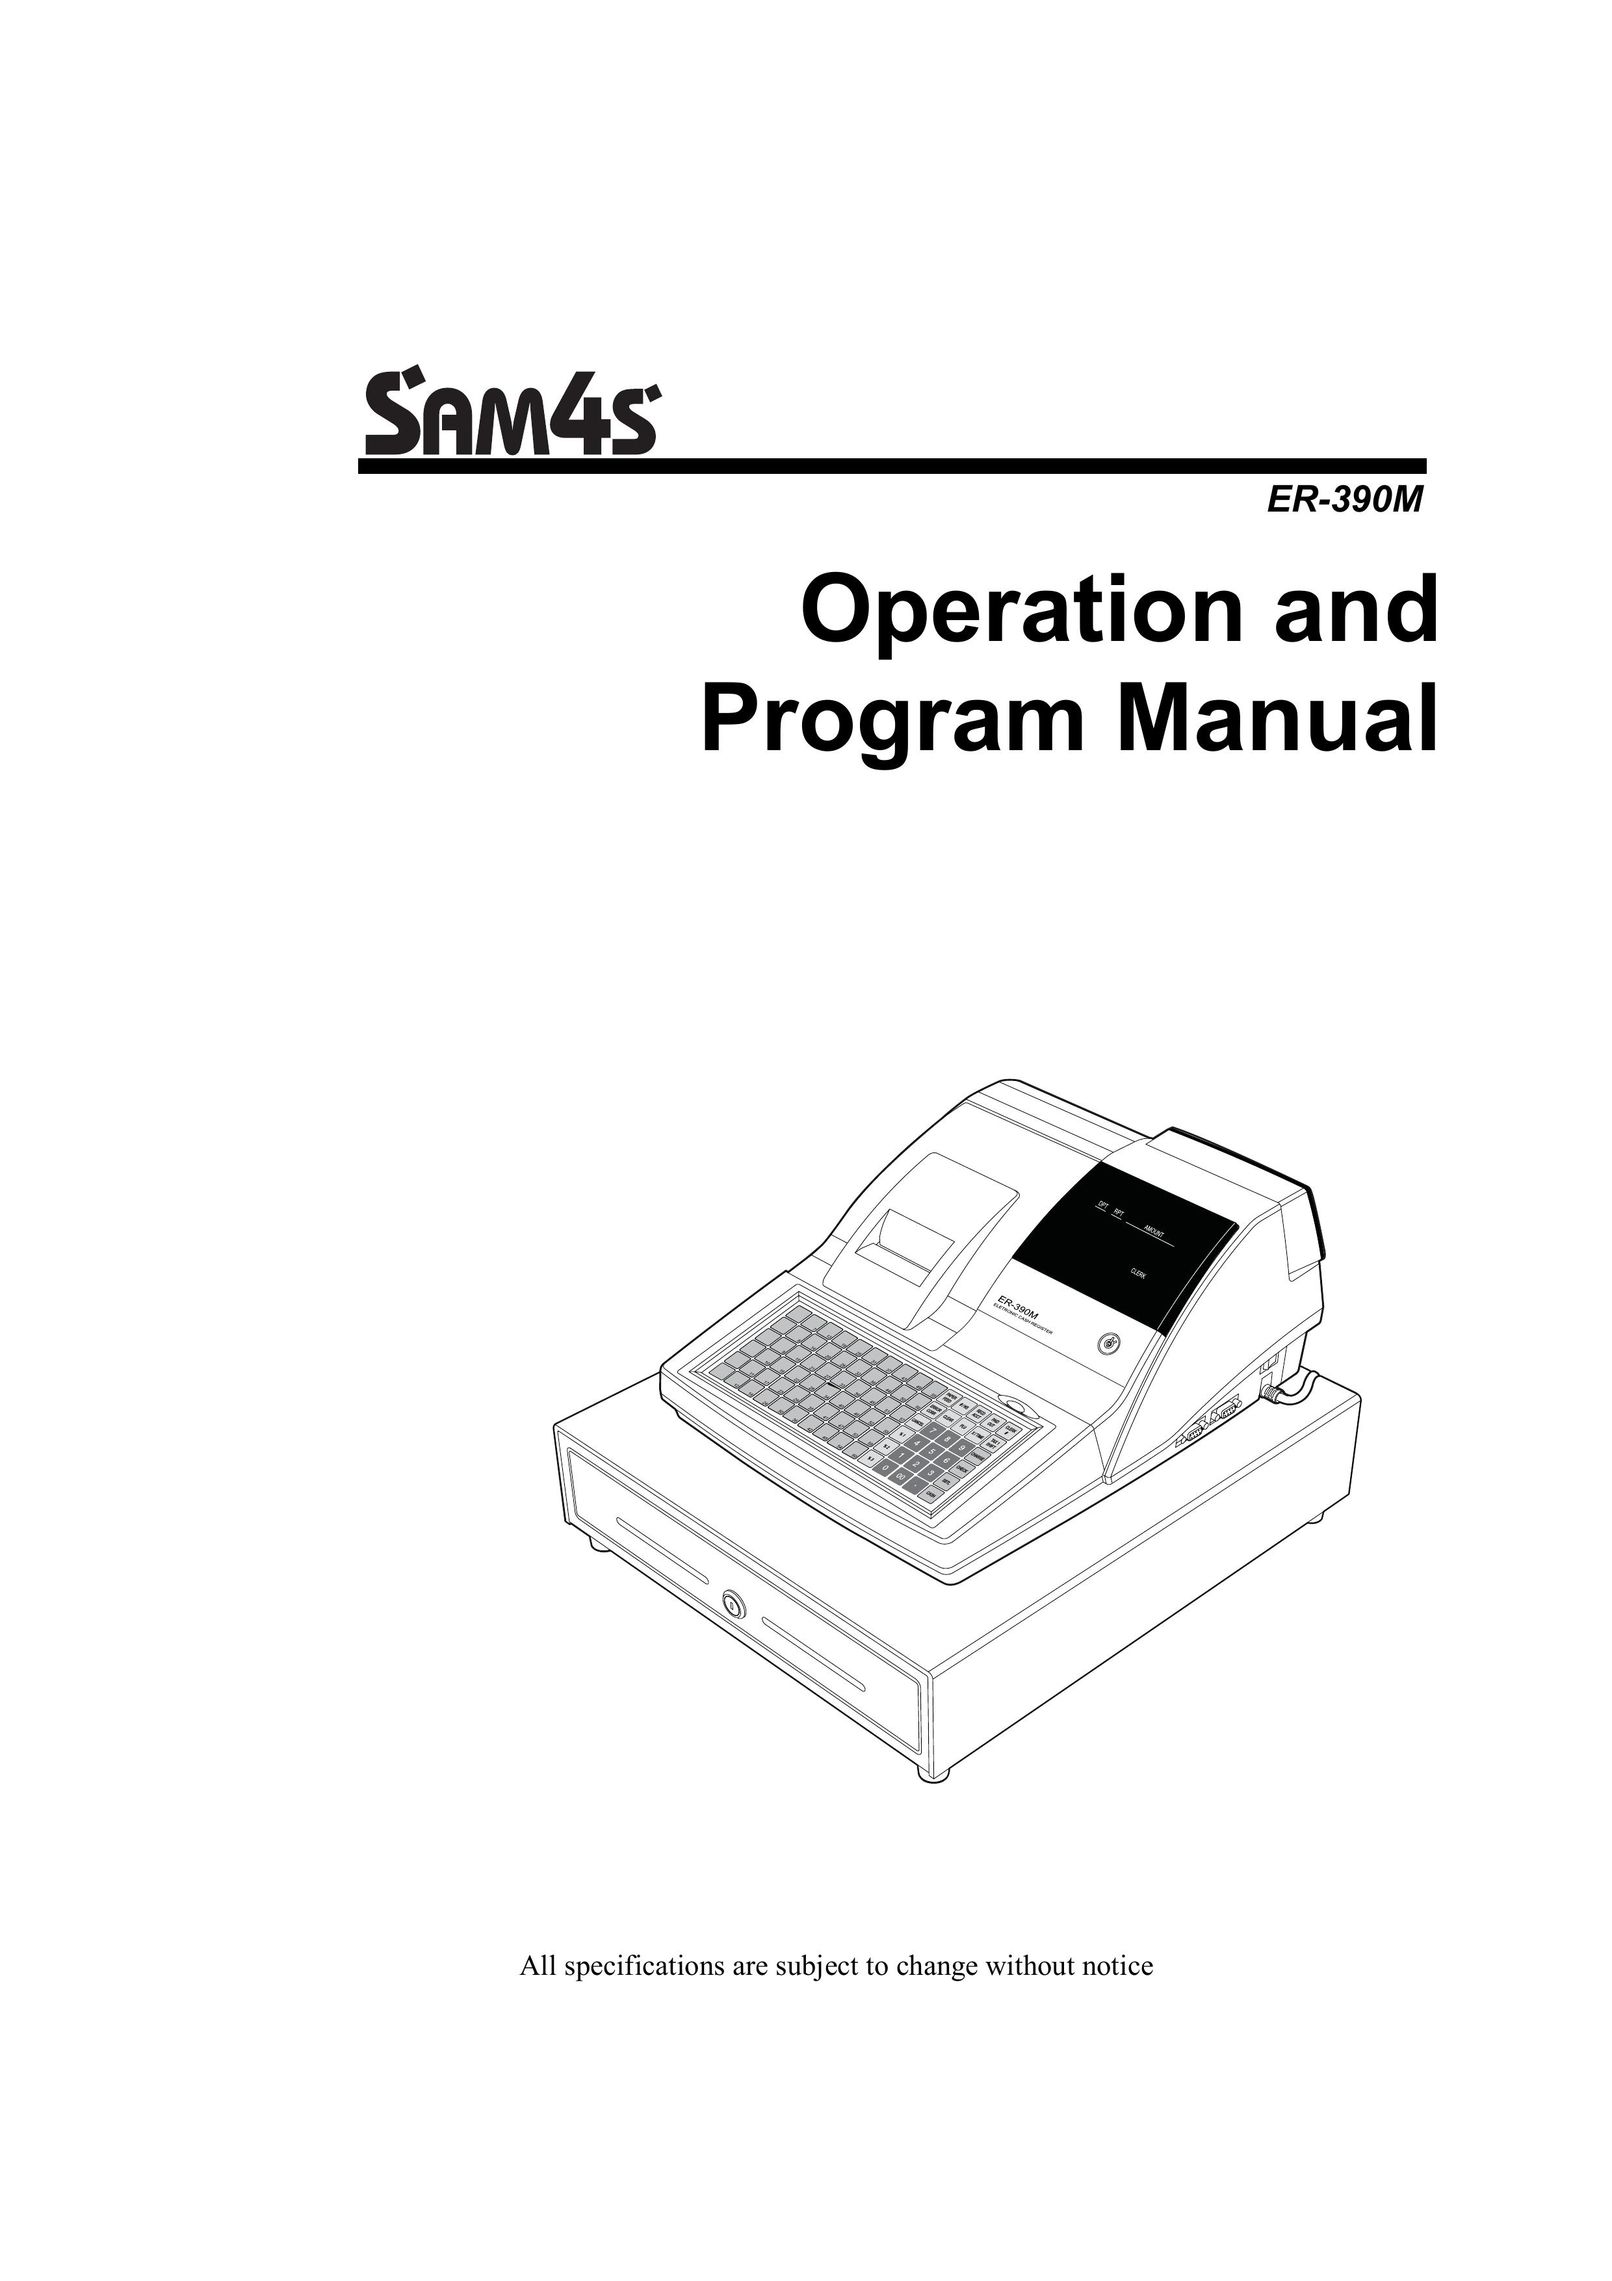 Sam4s ER-390M Cash Register User Manual